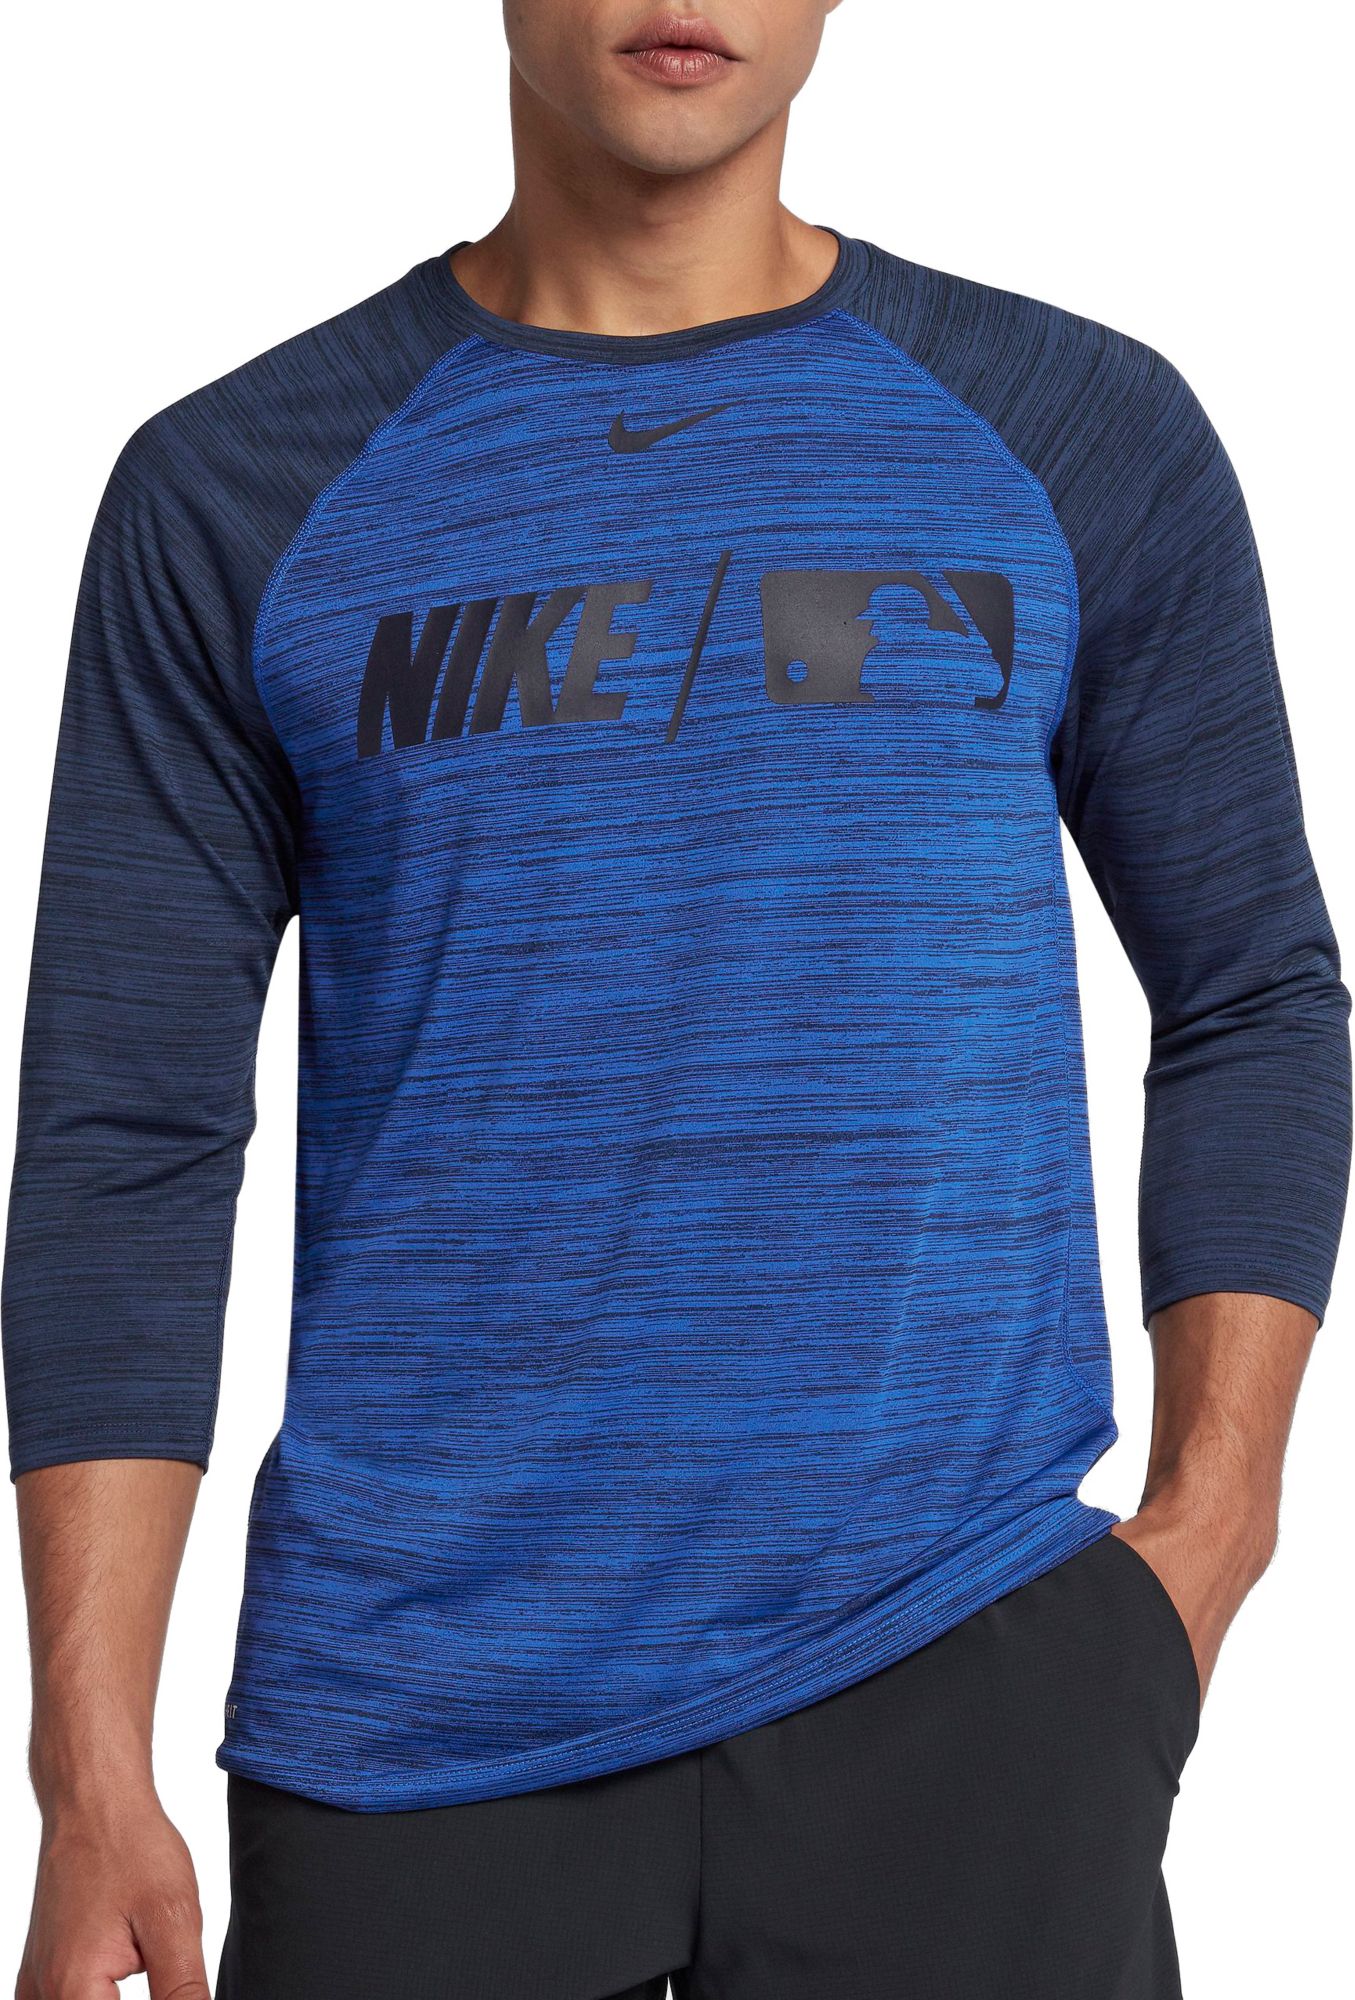 Nike / MLB 3/4 Sleeve Baseball T-Shirt